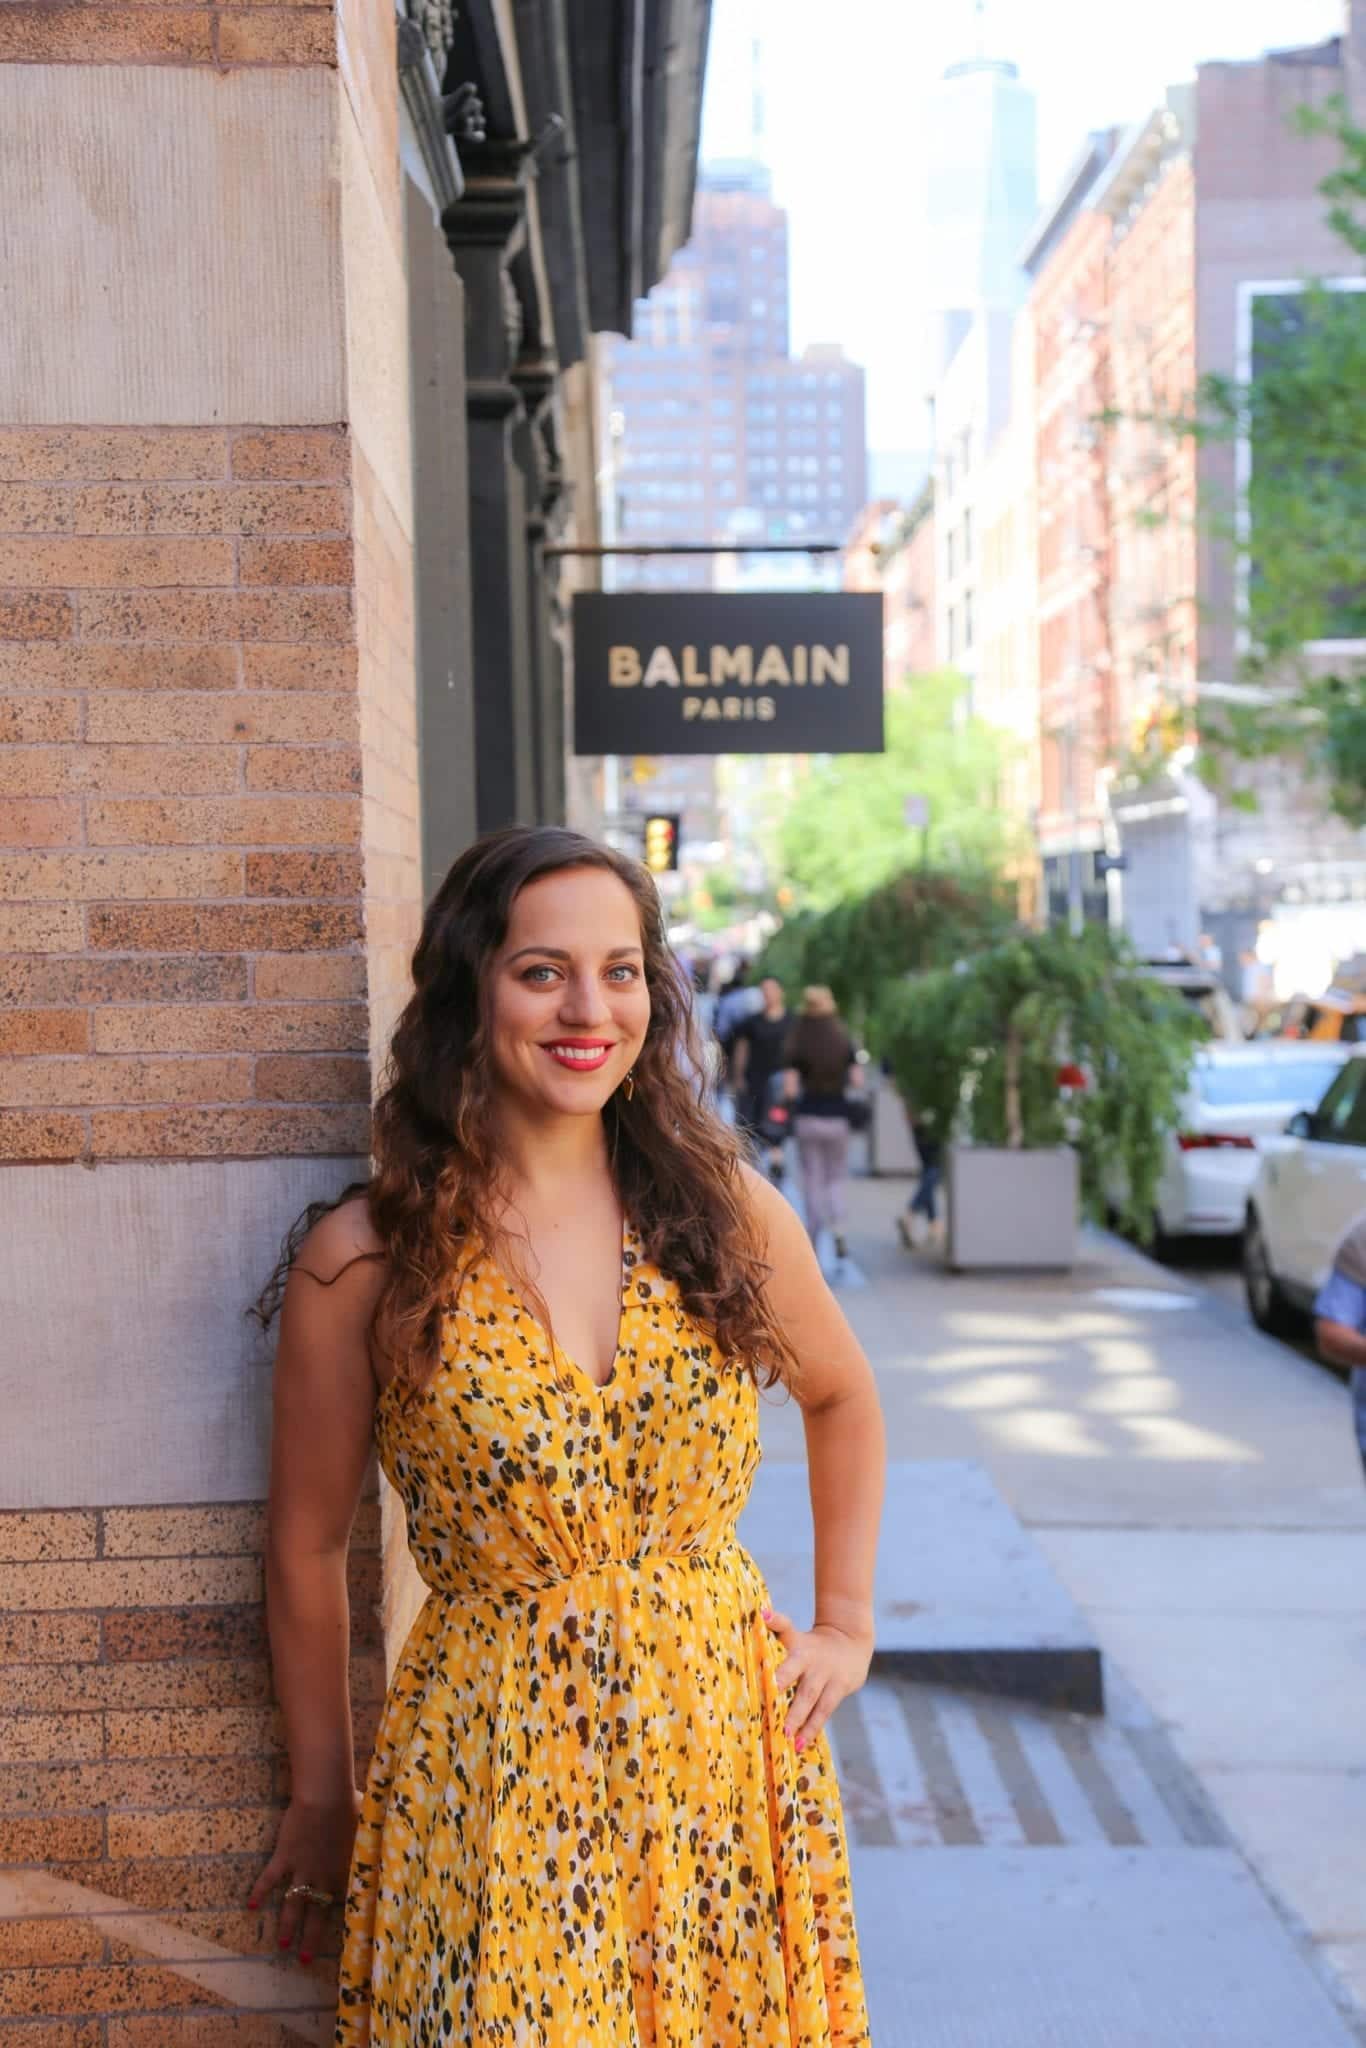 Kate in a yellow dress beneath the Balmain sign in SoHo, NYC